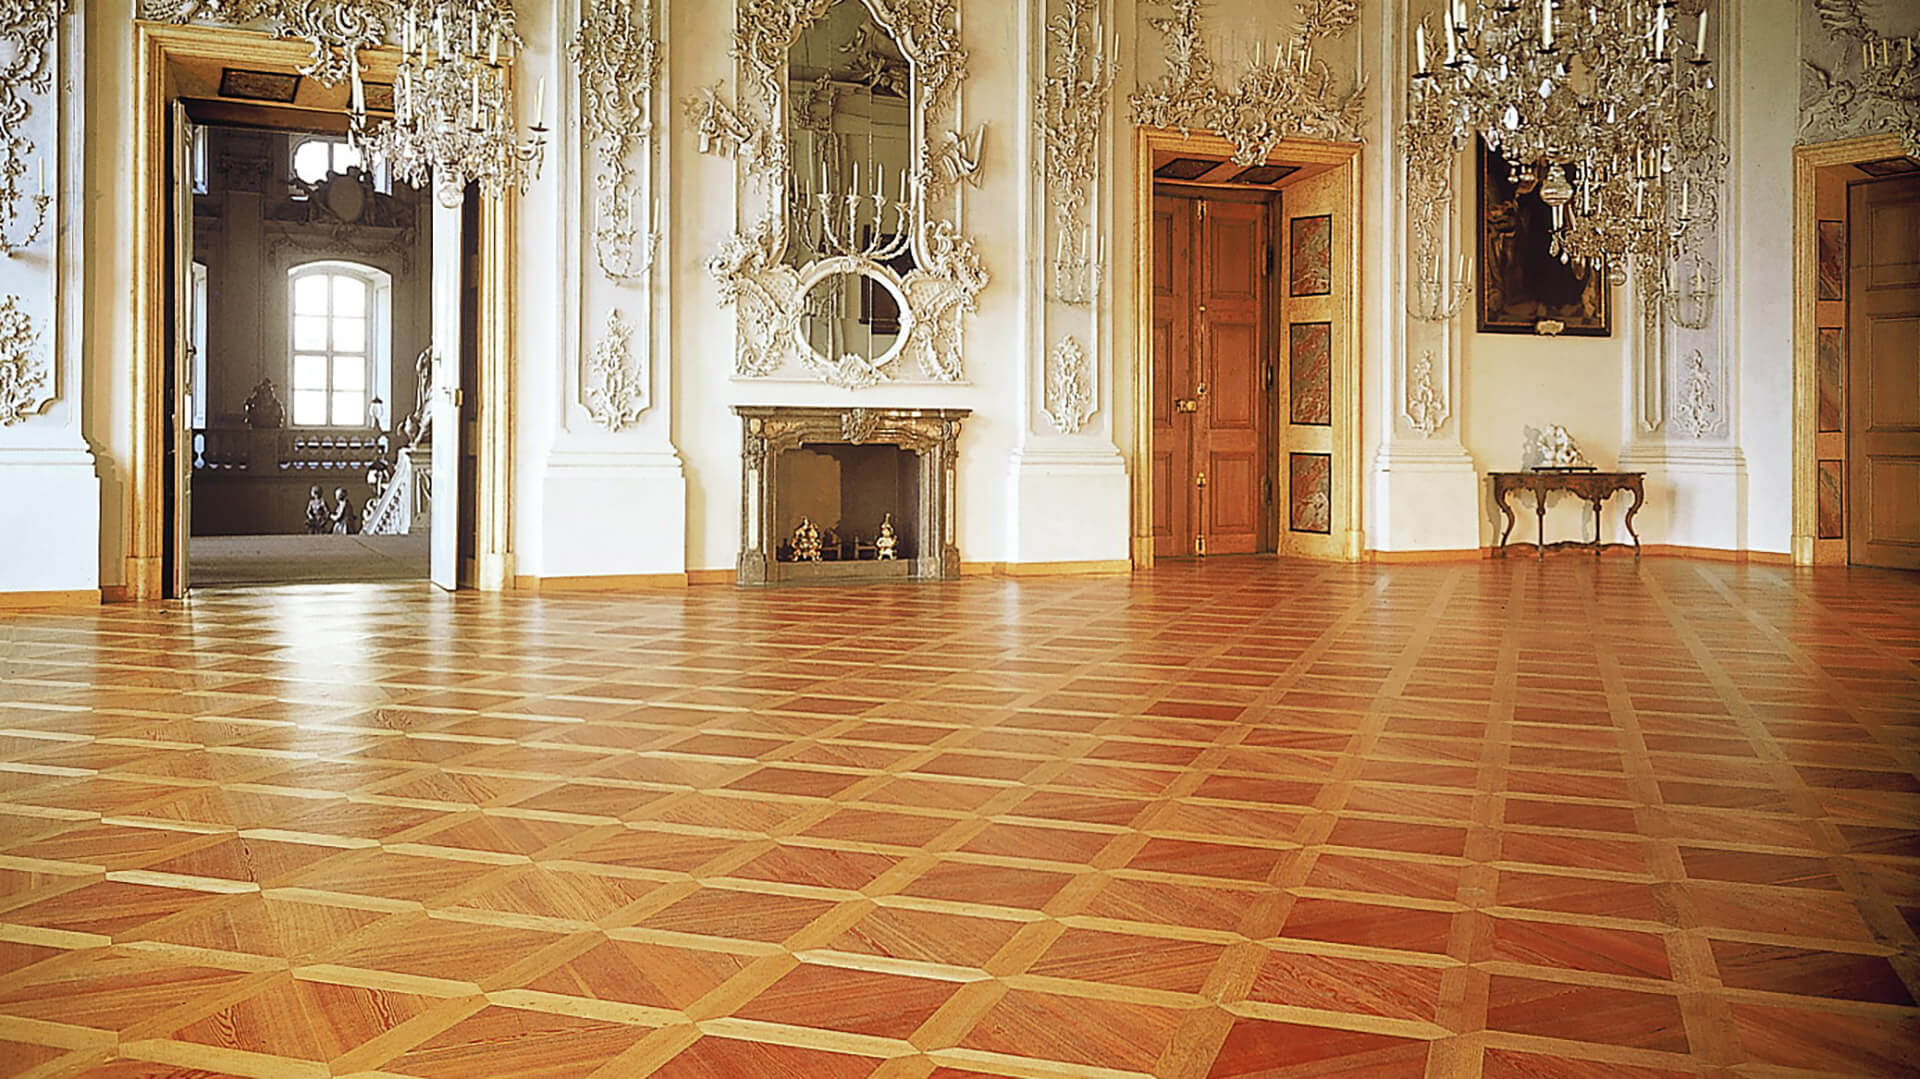 Residenz Würzburg White Hall